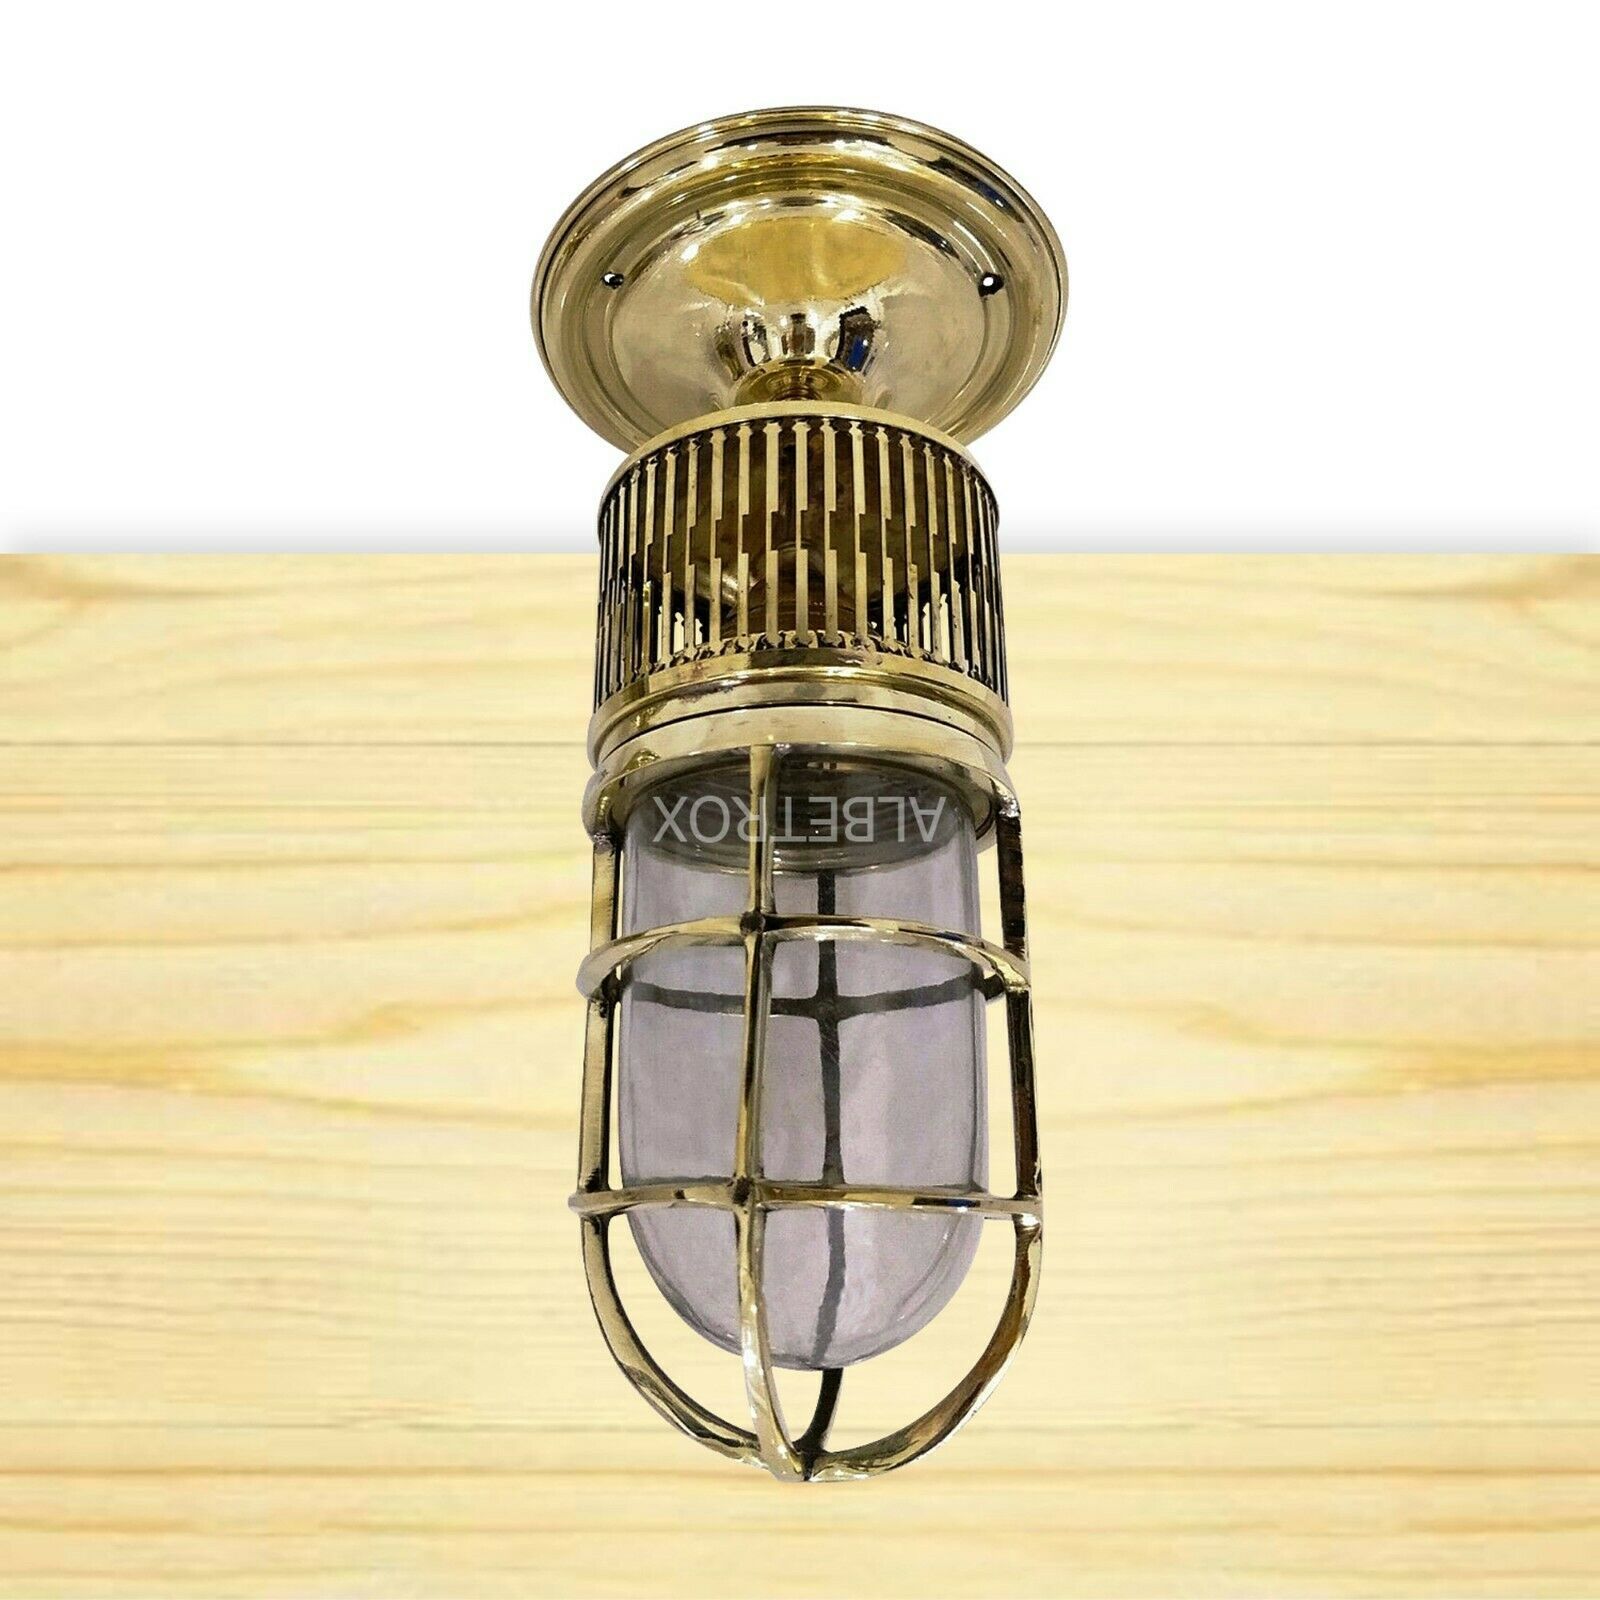 Nautical Bulkhead Light Brass Ship Marine Vintage Antique Ceiling Light Fixture